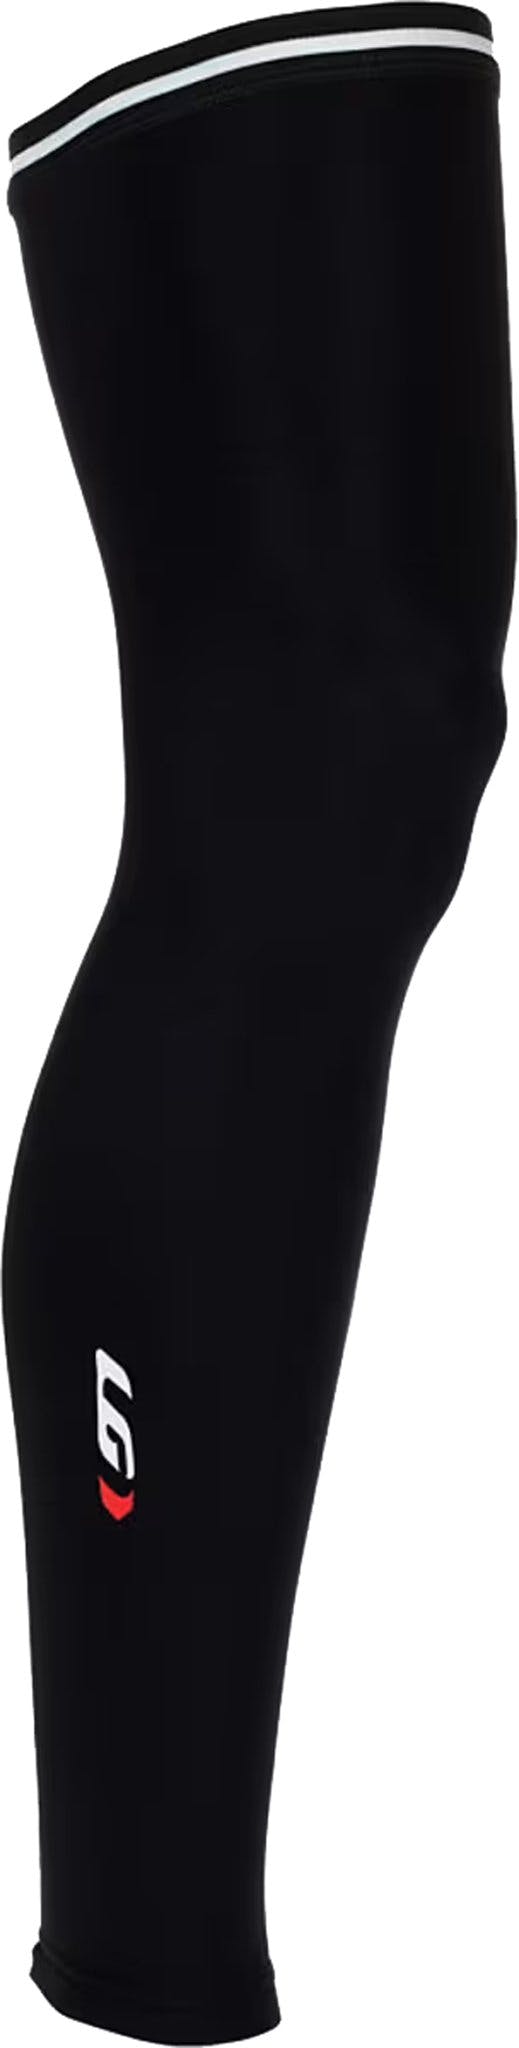 Product image for Zip Leg Warmer - Women's